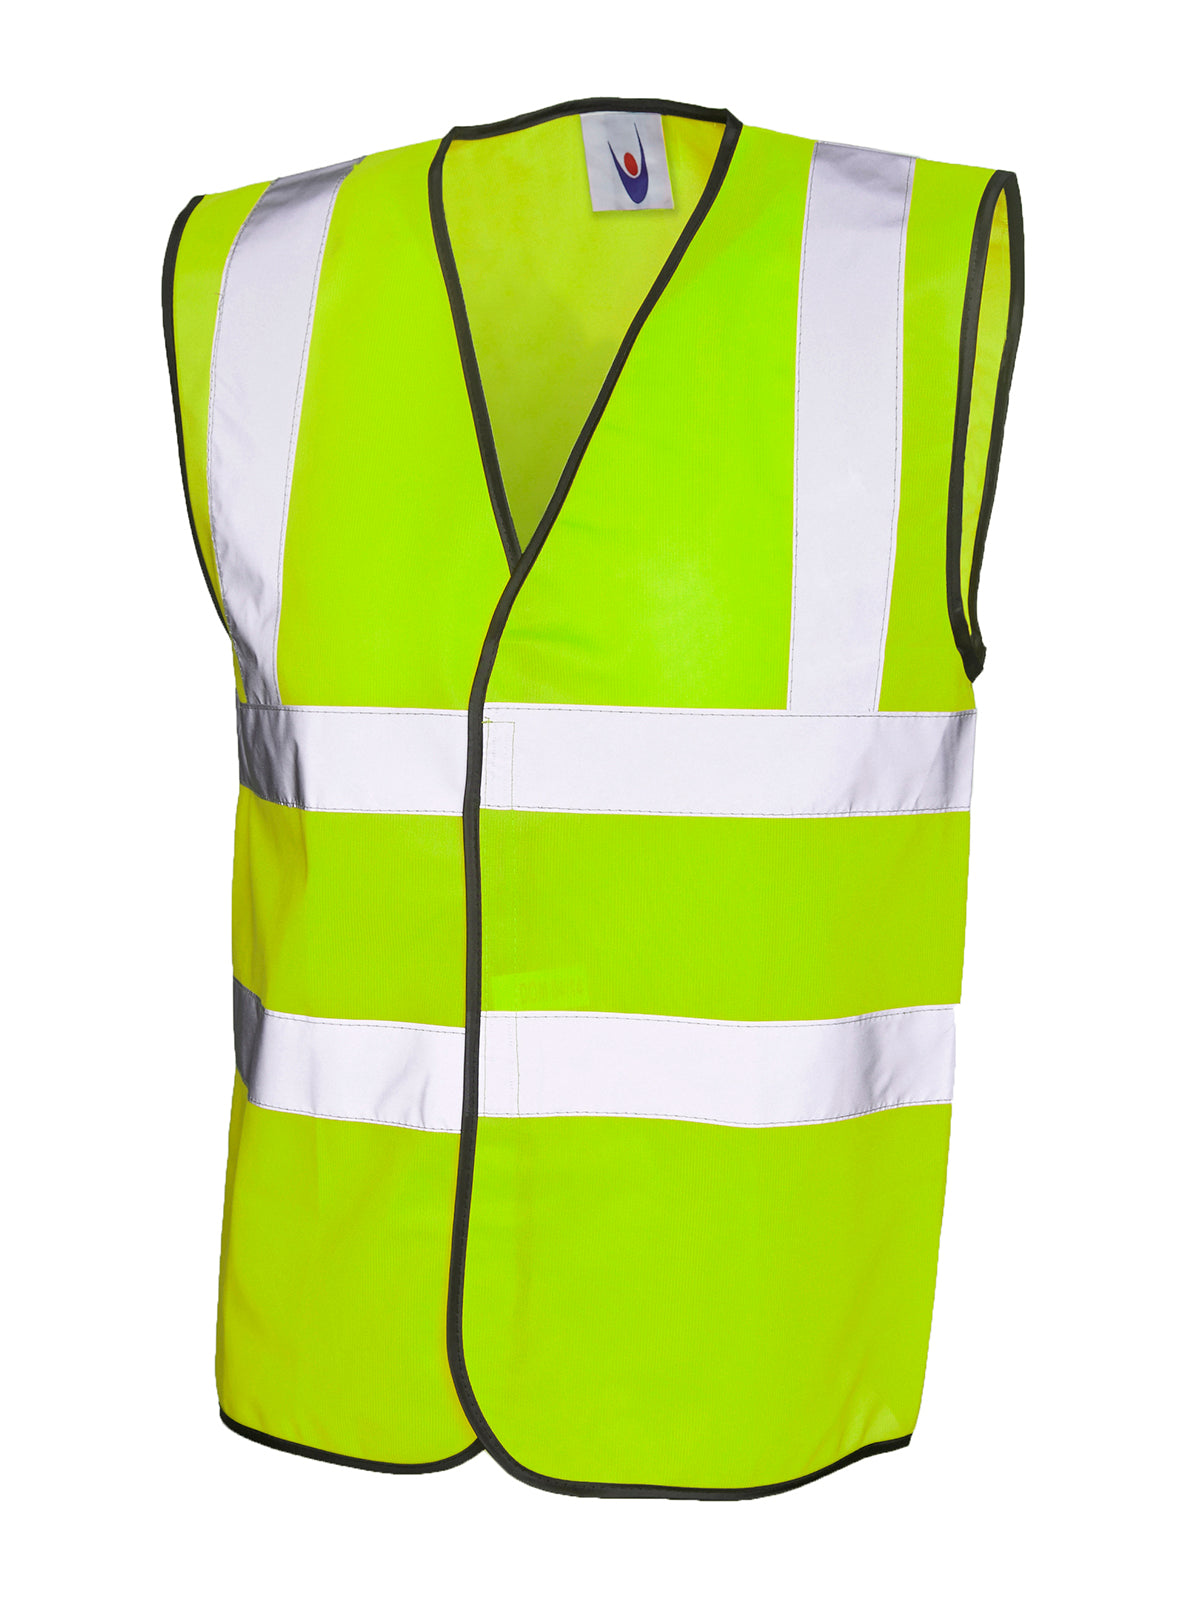 Uneek Long Sleeve Safety Waist Coat UC802 - Yellow